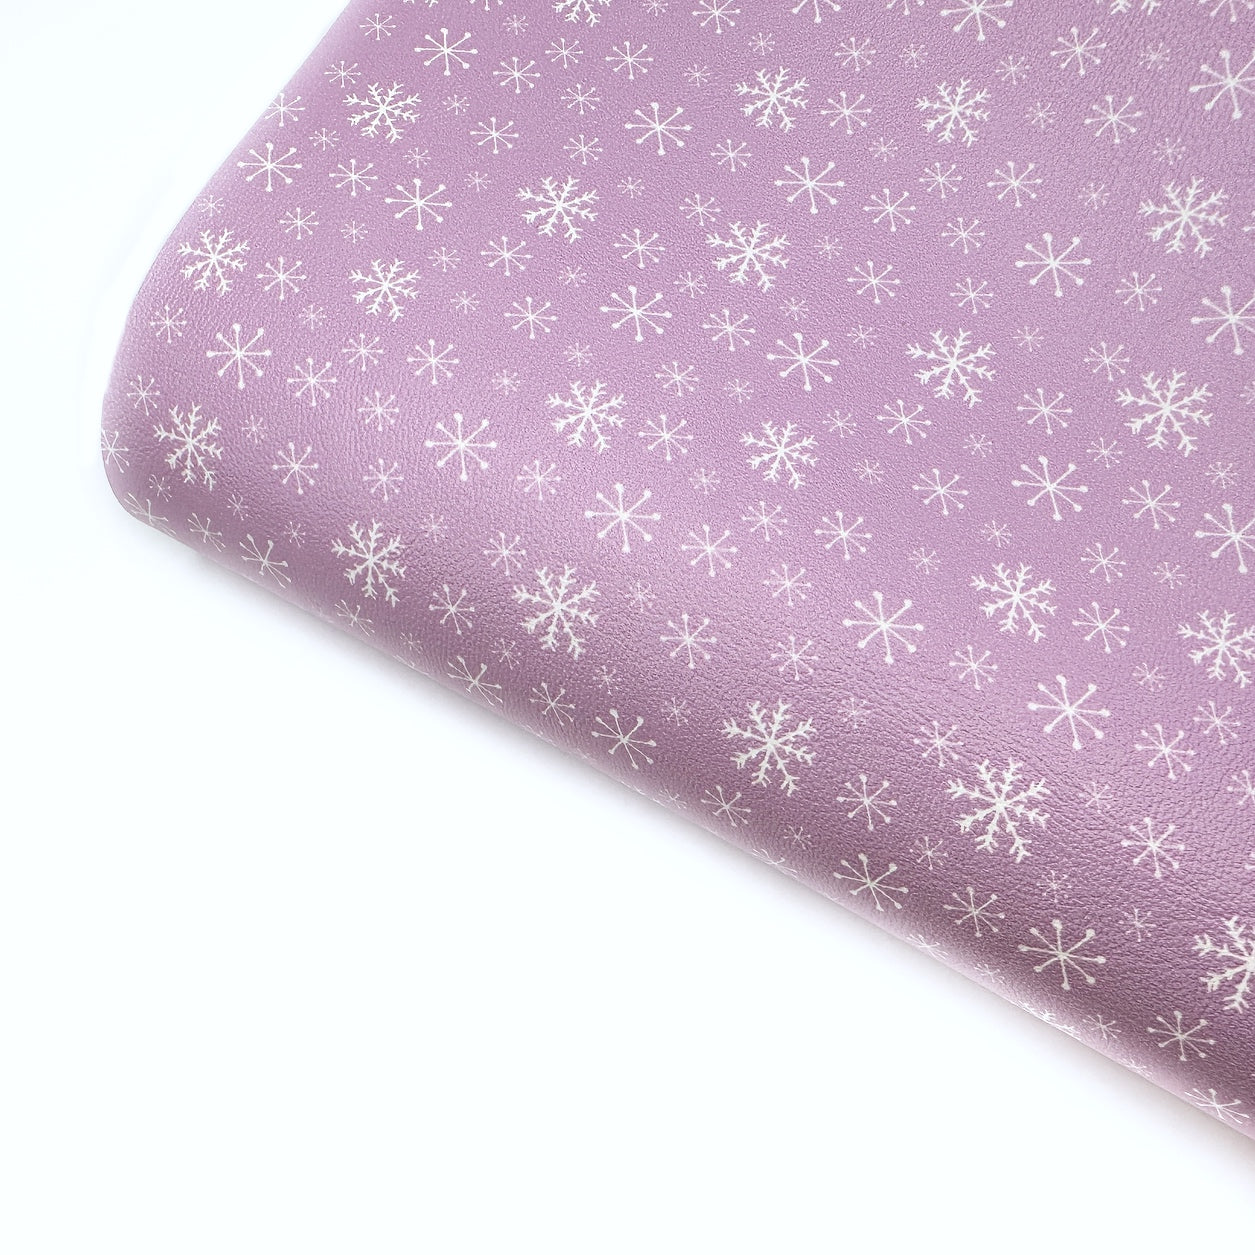 Soft Purple Falling Snowflakes Premium Faux Leather Fabric Sheets